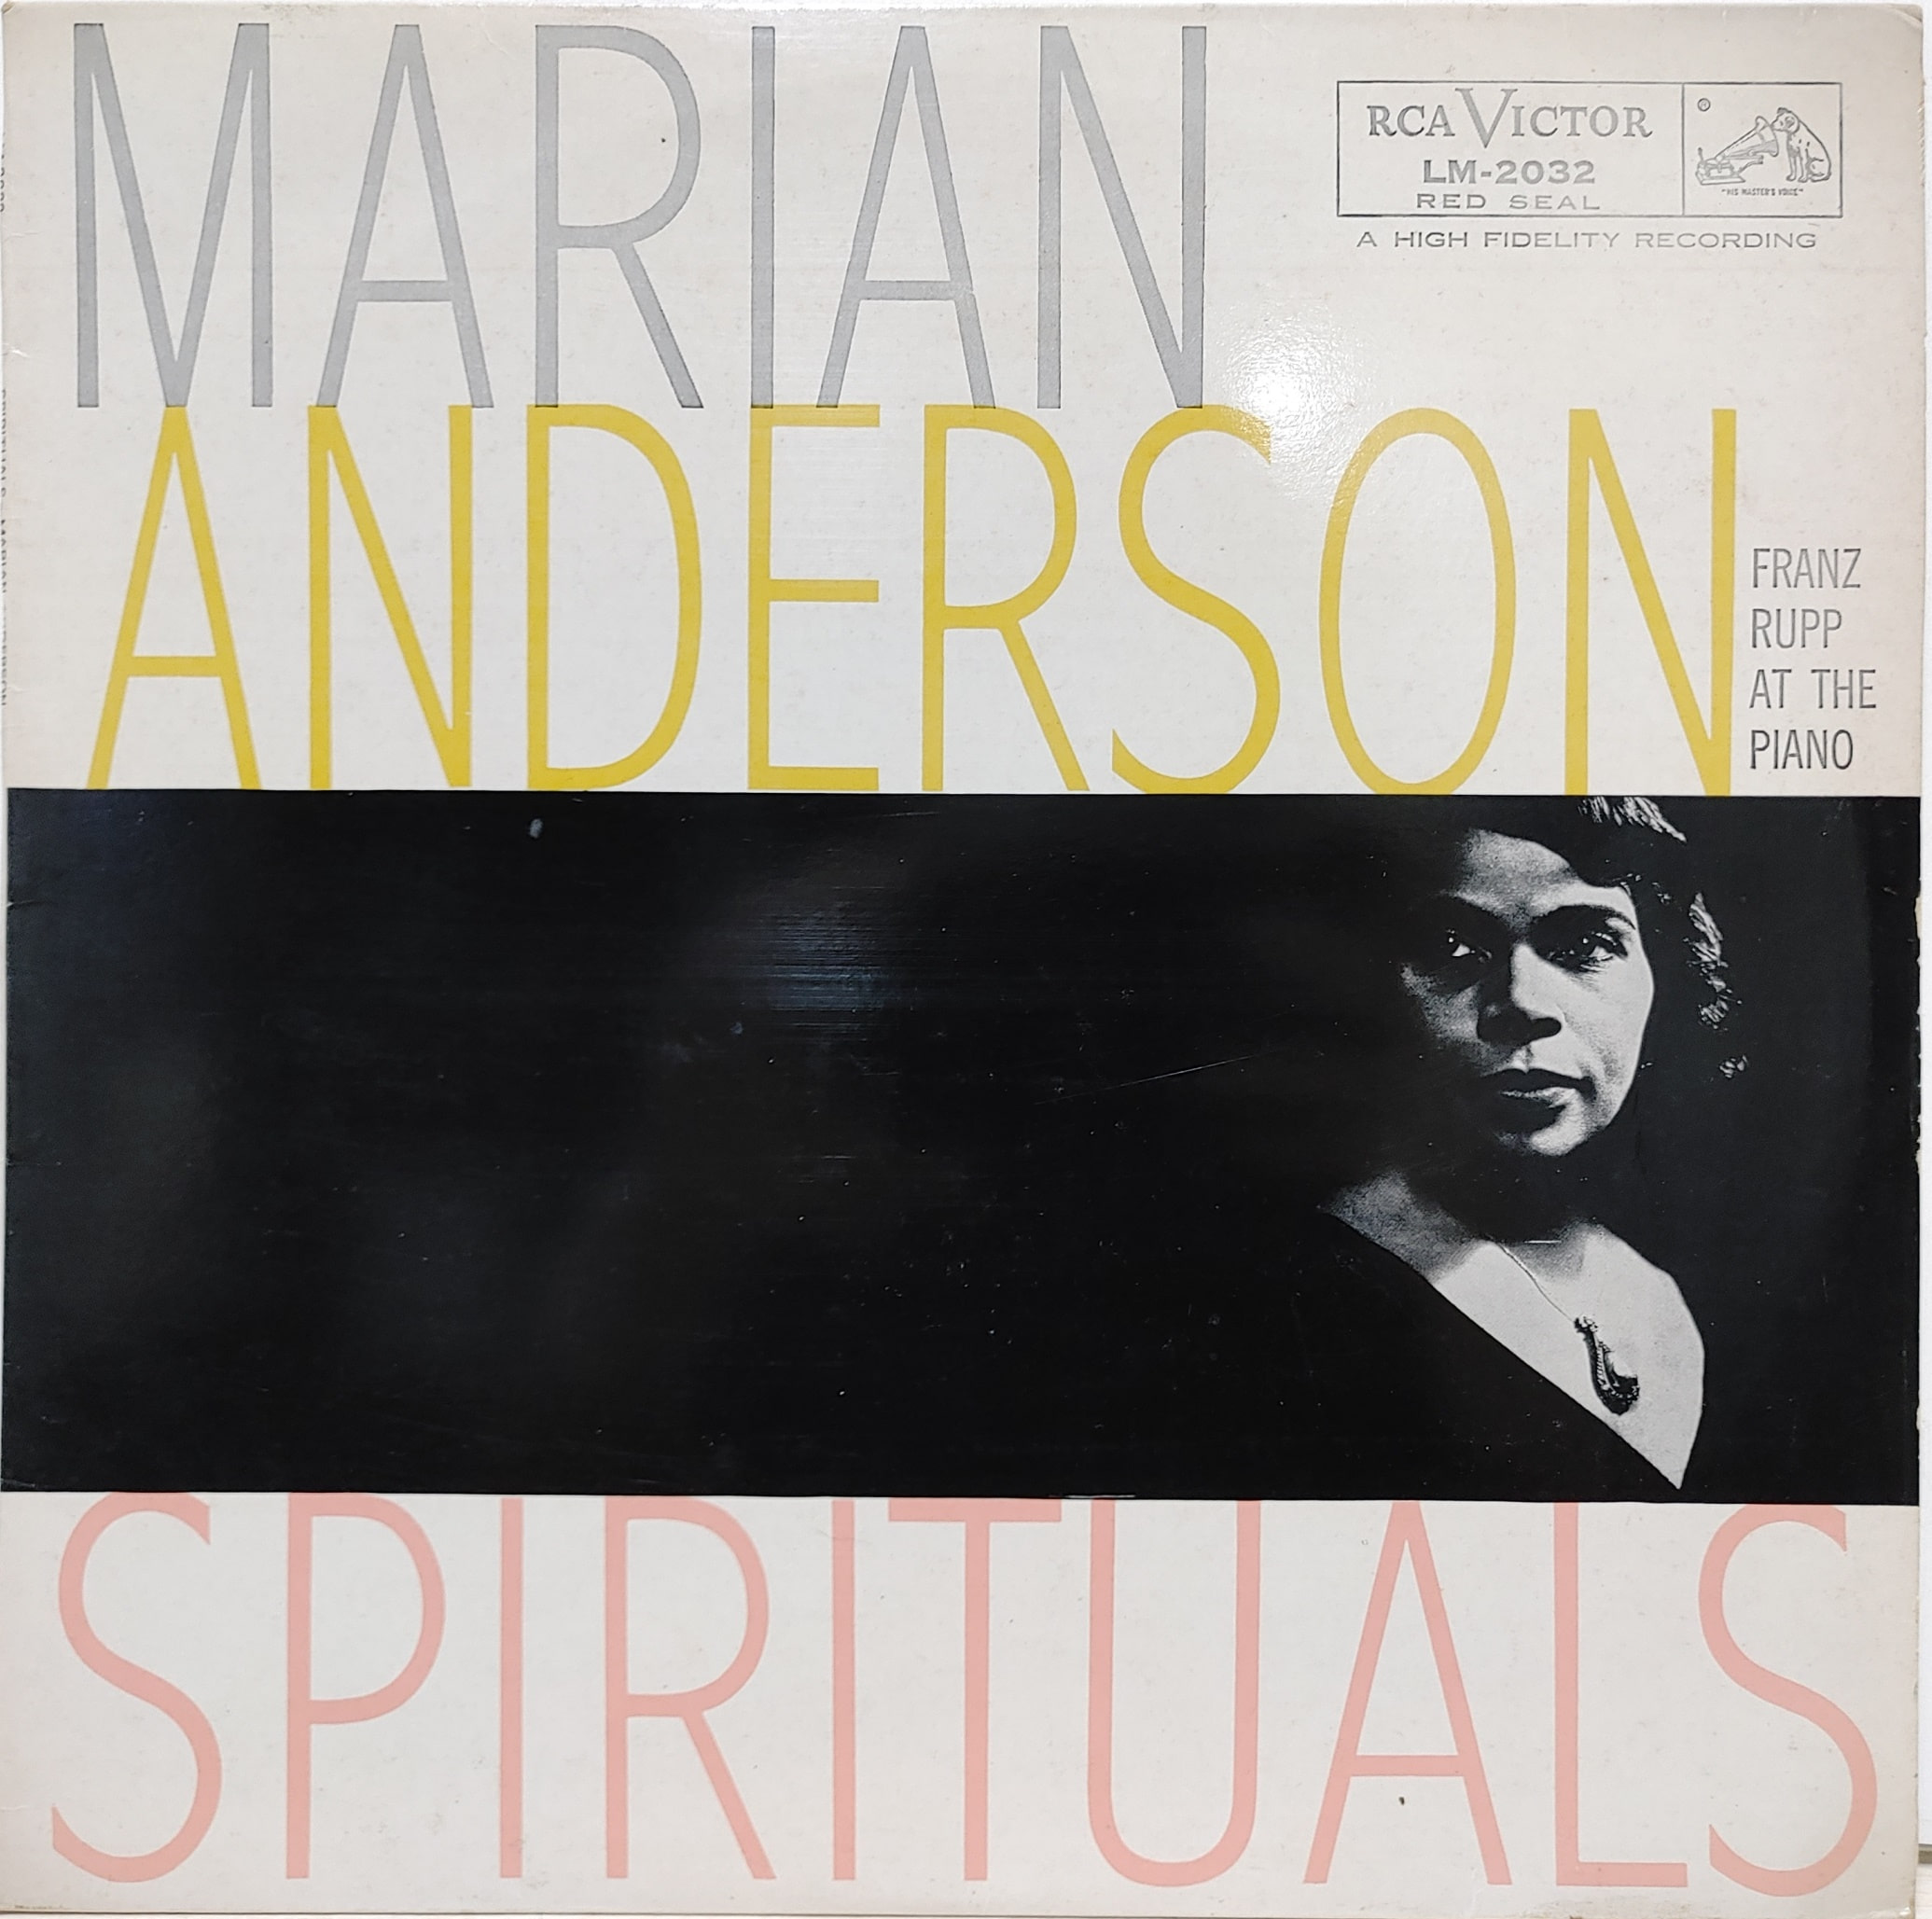 MARIAN ANDERSON / SPIRITUAIS